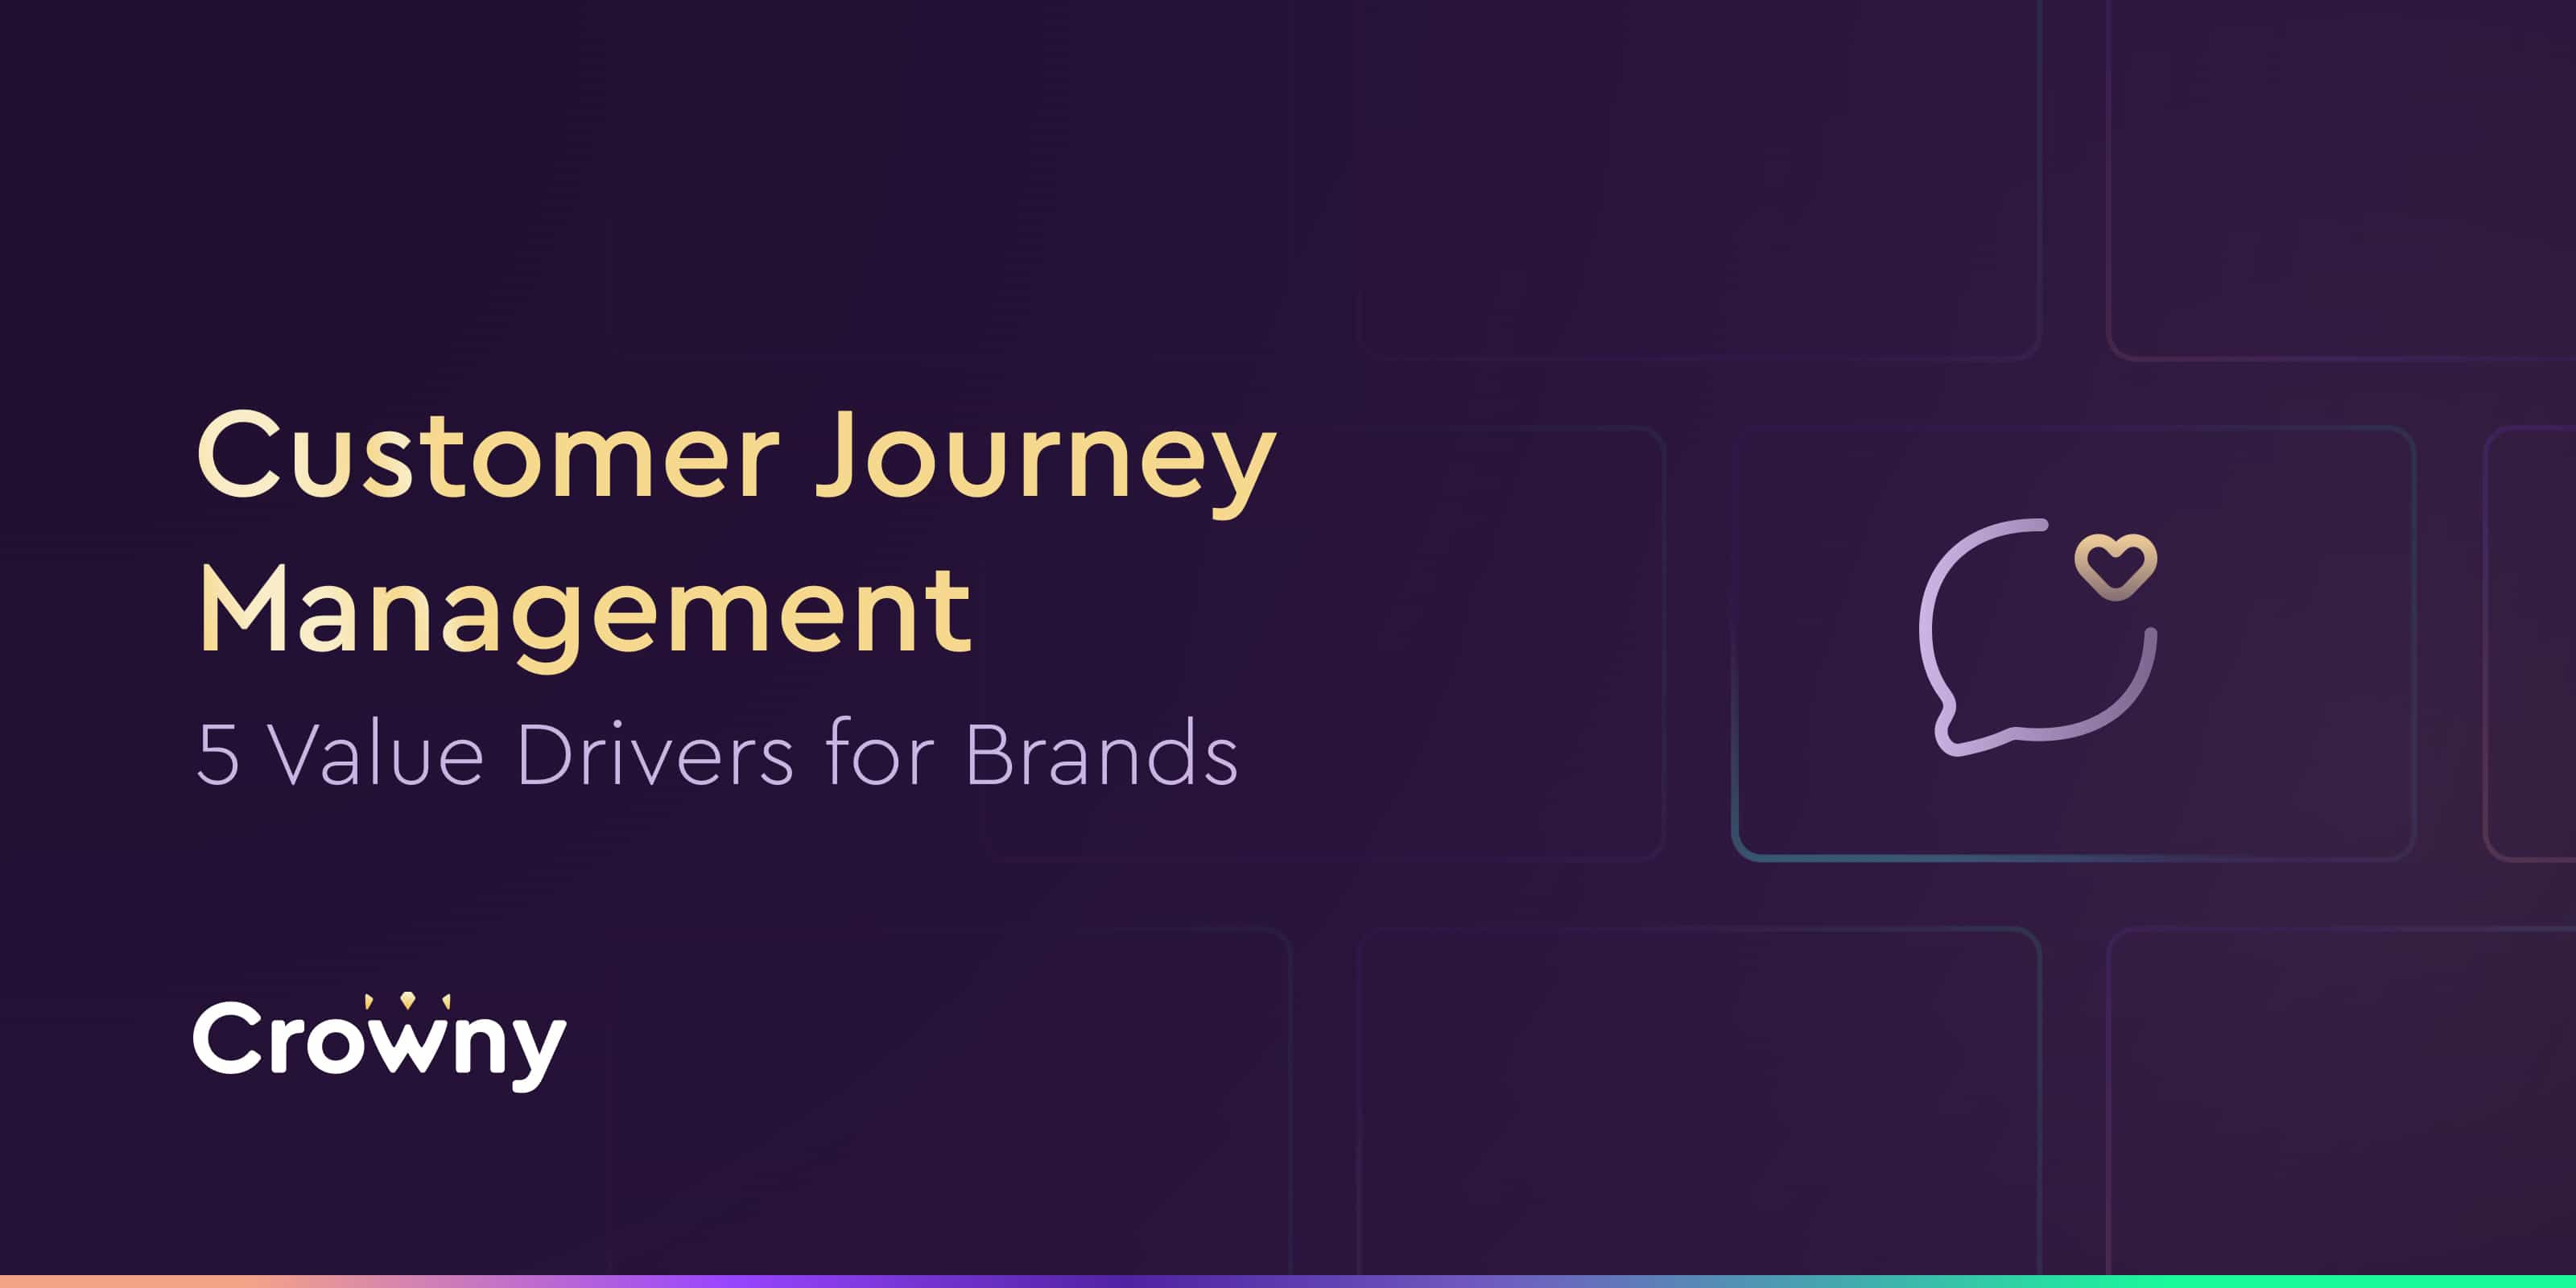 Customer Journey Management - 5 Value Drivers for Brands